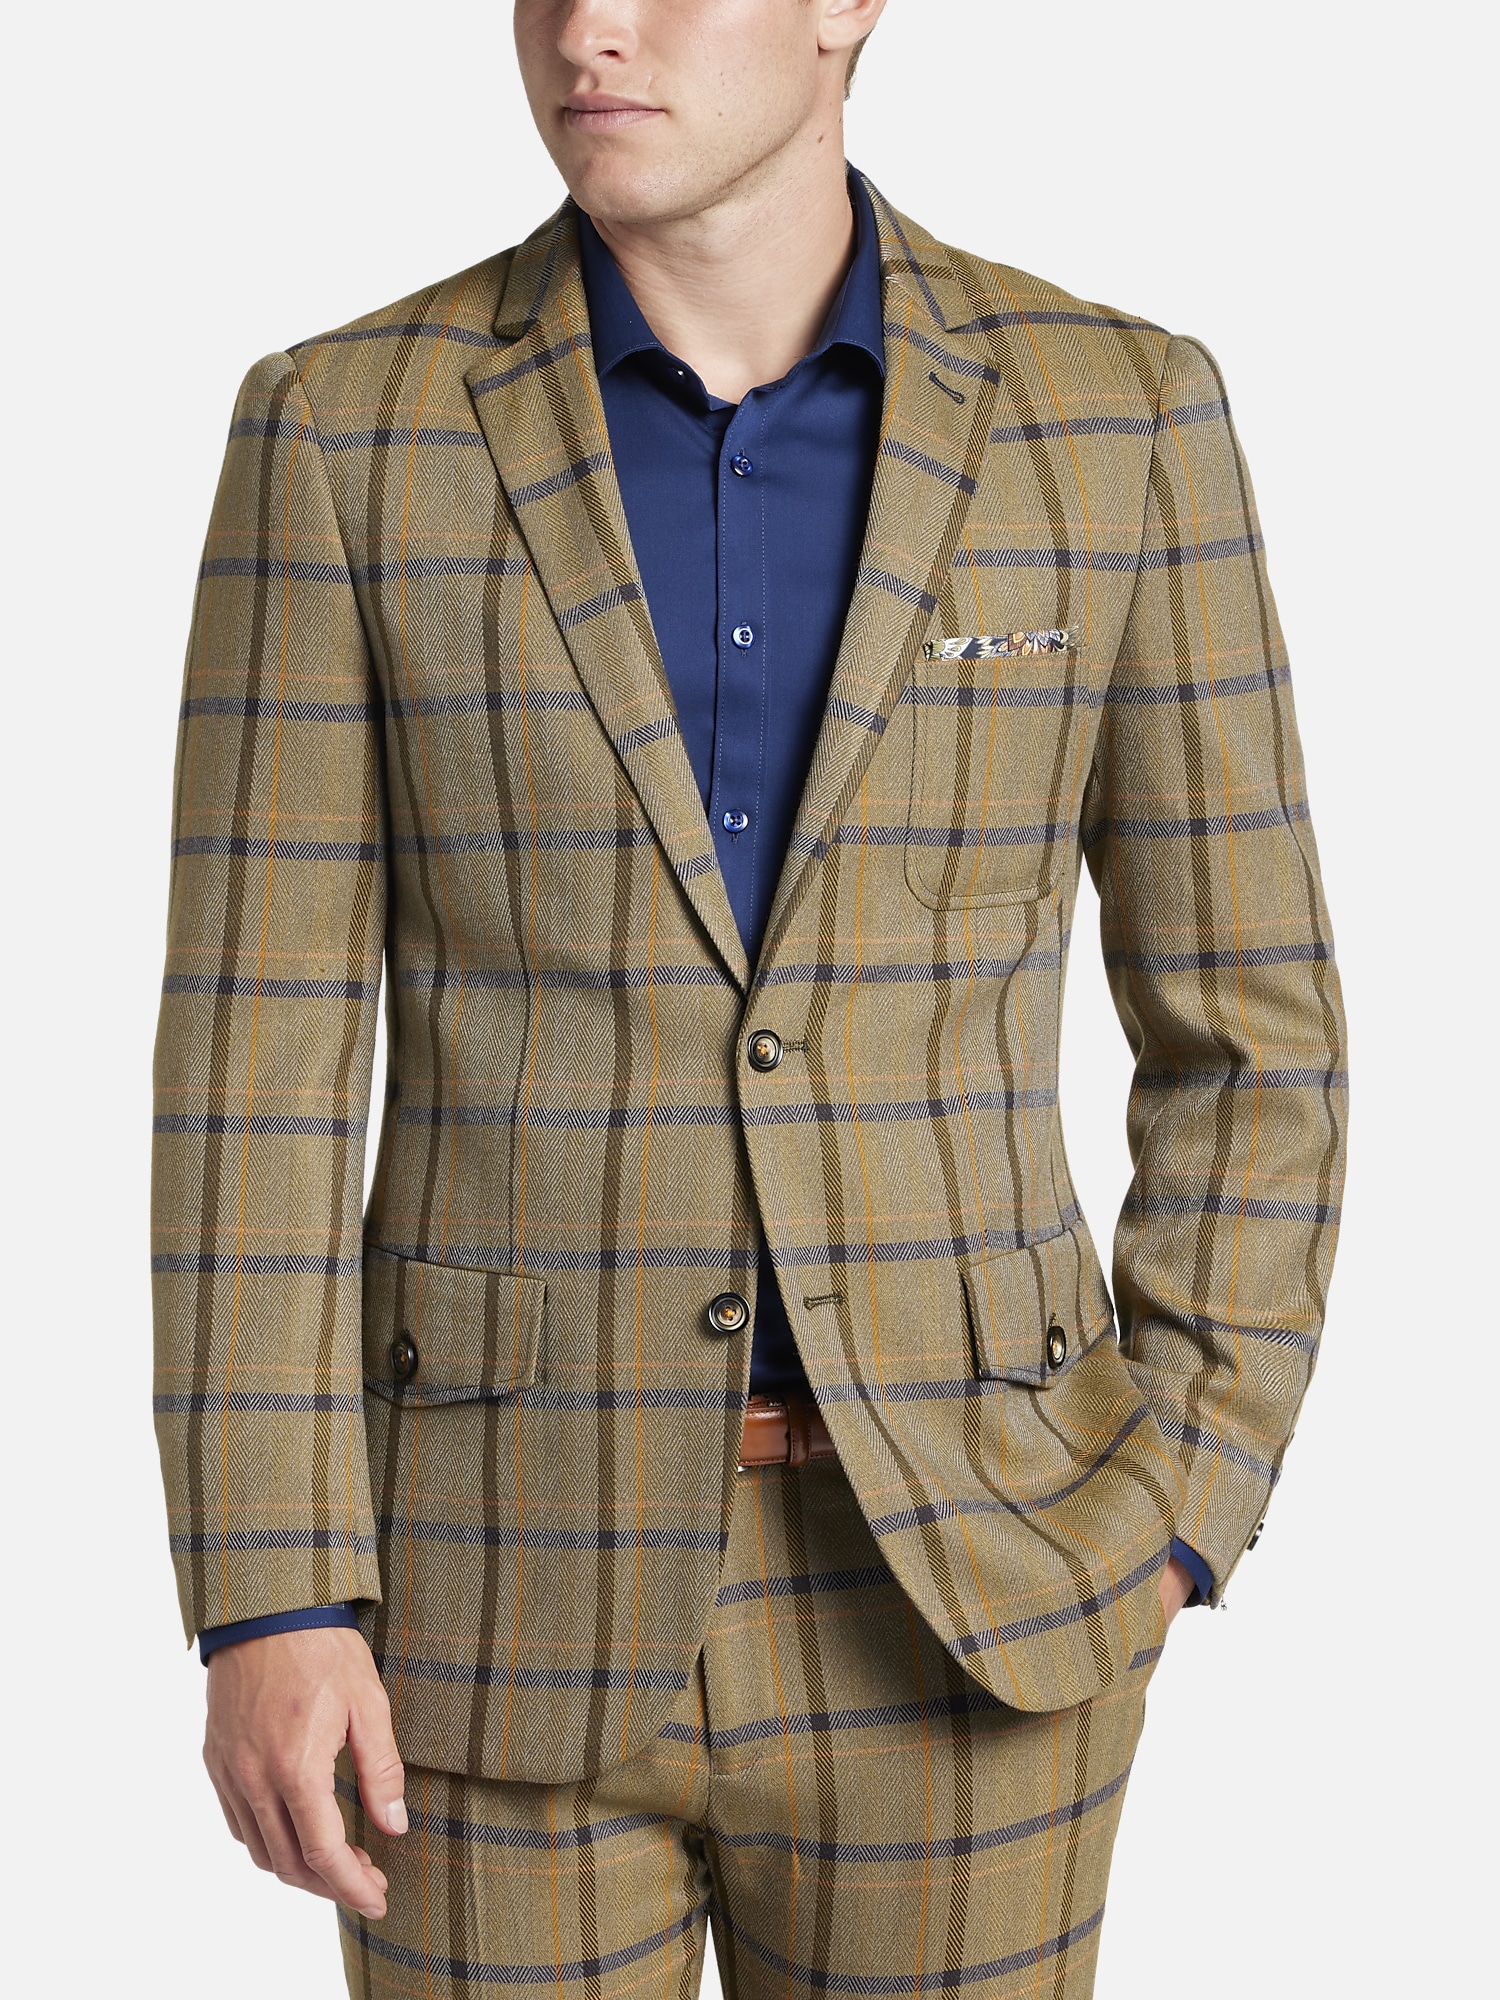 Paisley & Gray Slim Fit Herringbone Plaid Suit Separates Men's Jackets only $29.99: eDeal Info